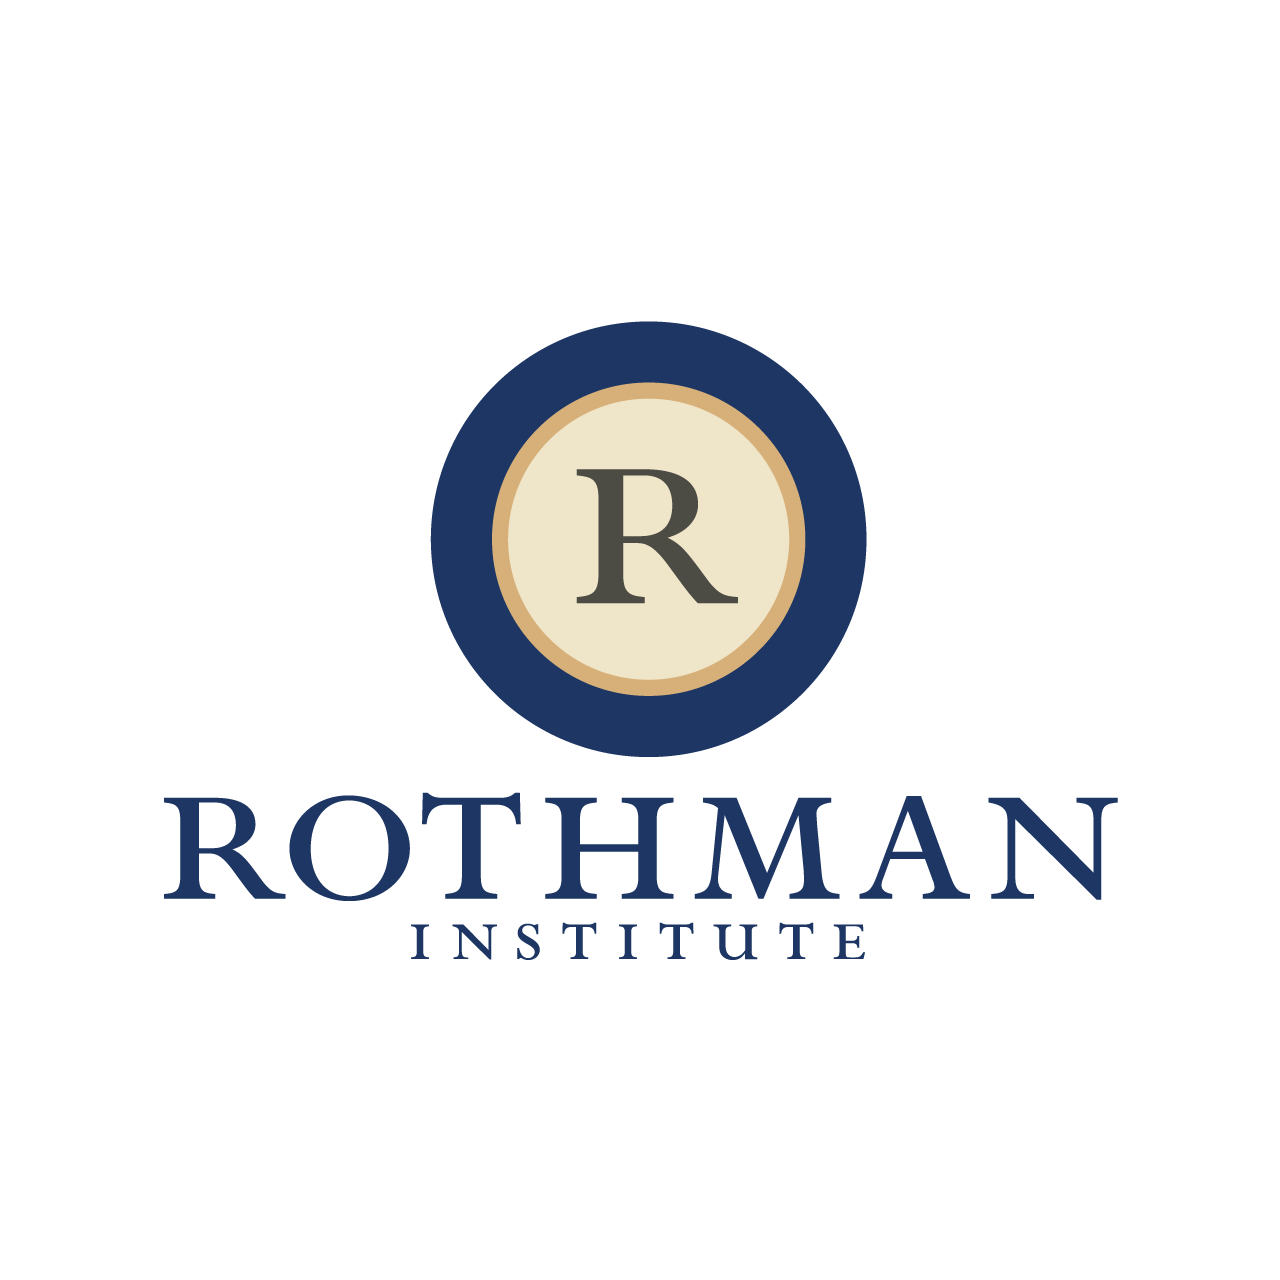 Rothman Orthopaedics Institute